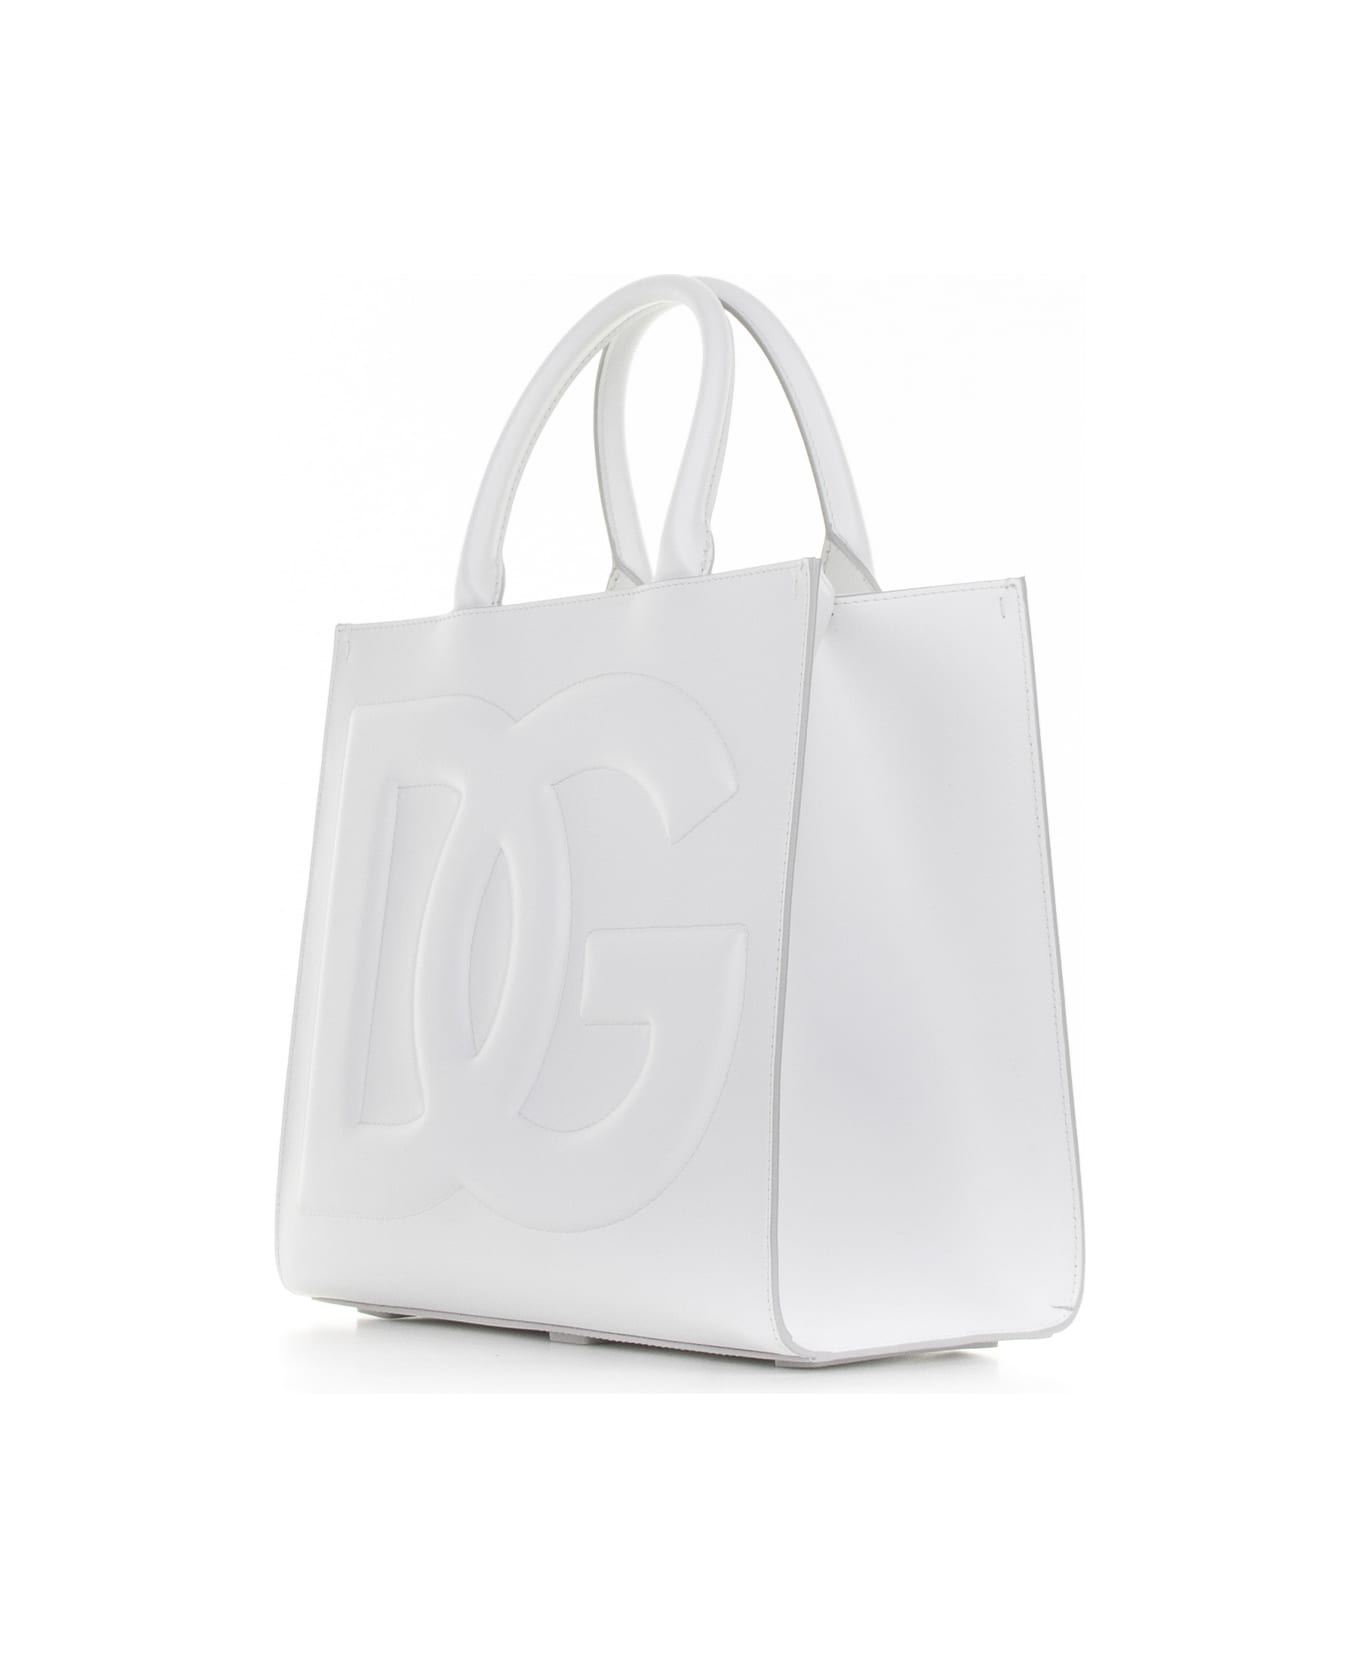 Dolce & Gabbana Daily Small White Leather Shopping Bag - BIANCO OTTICO